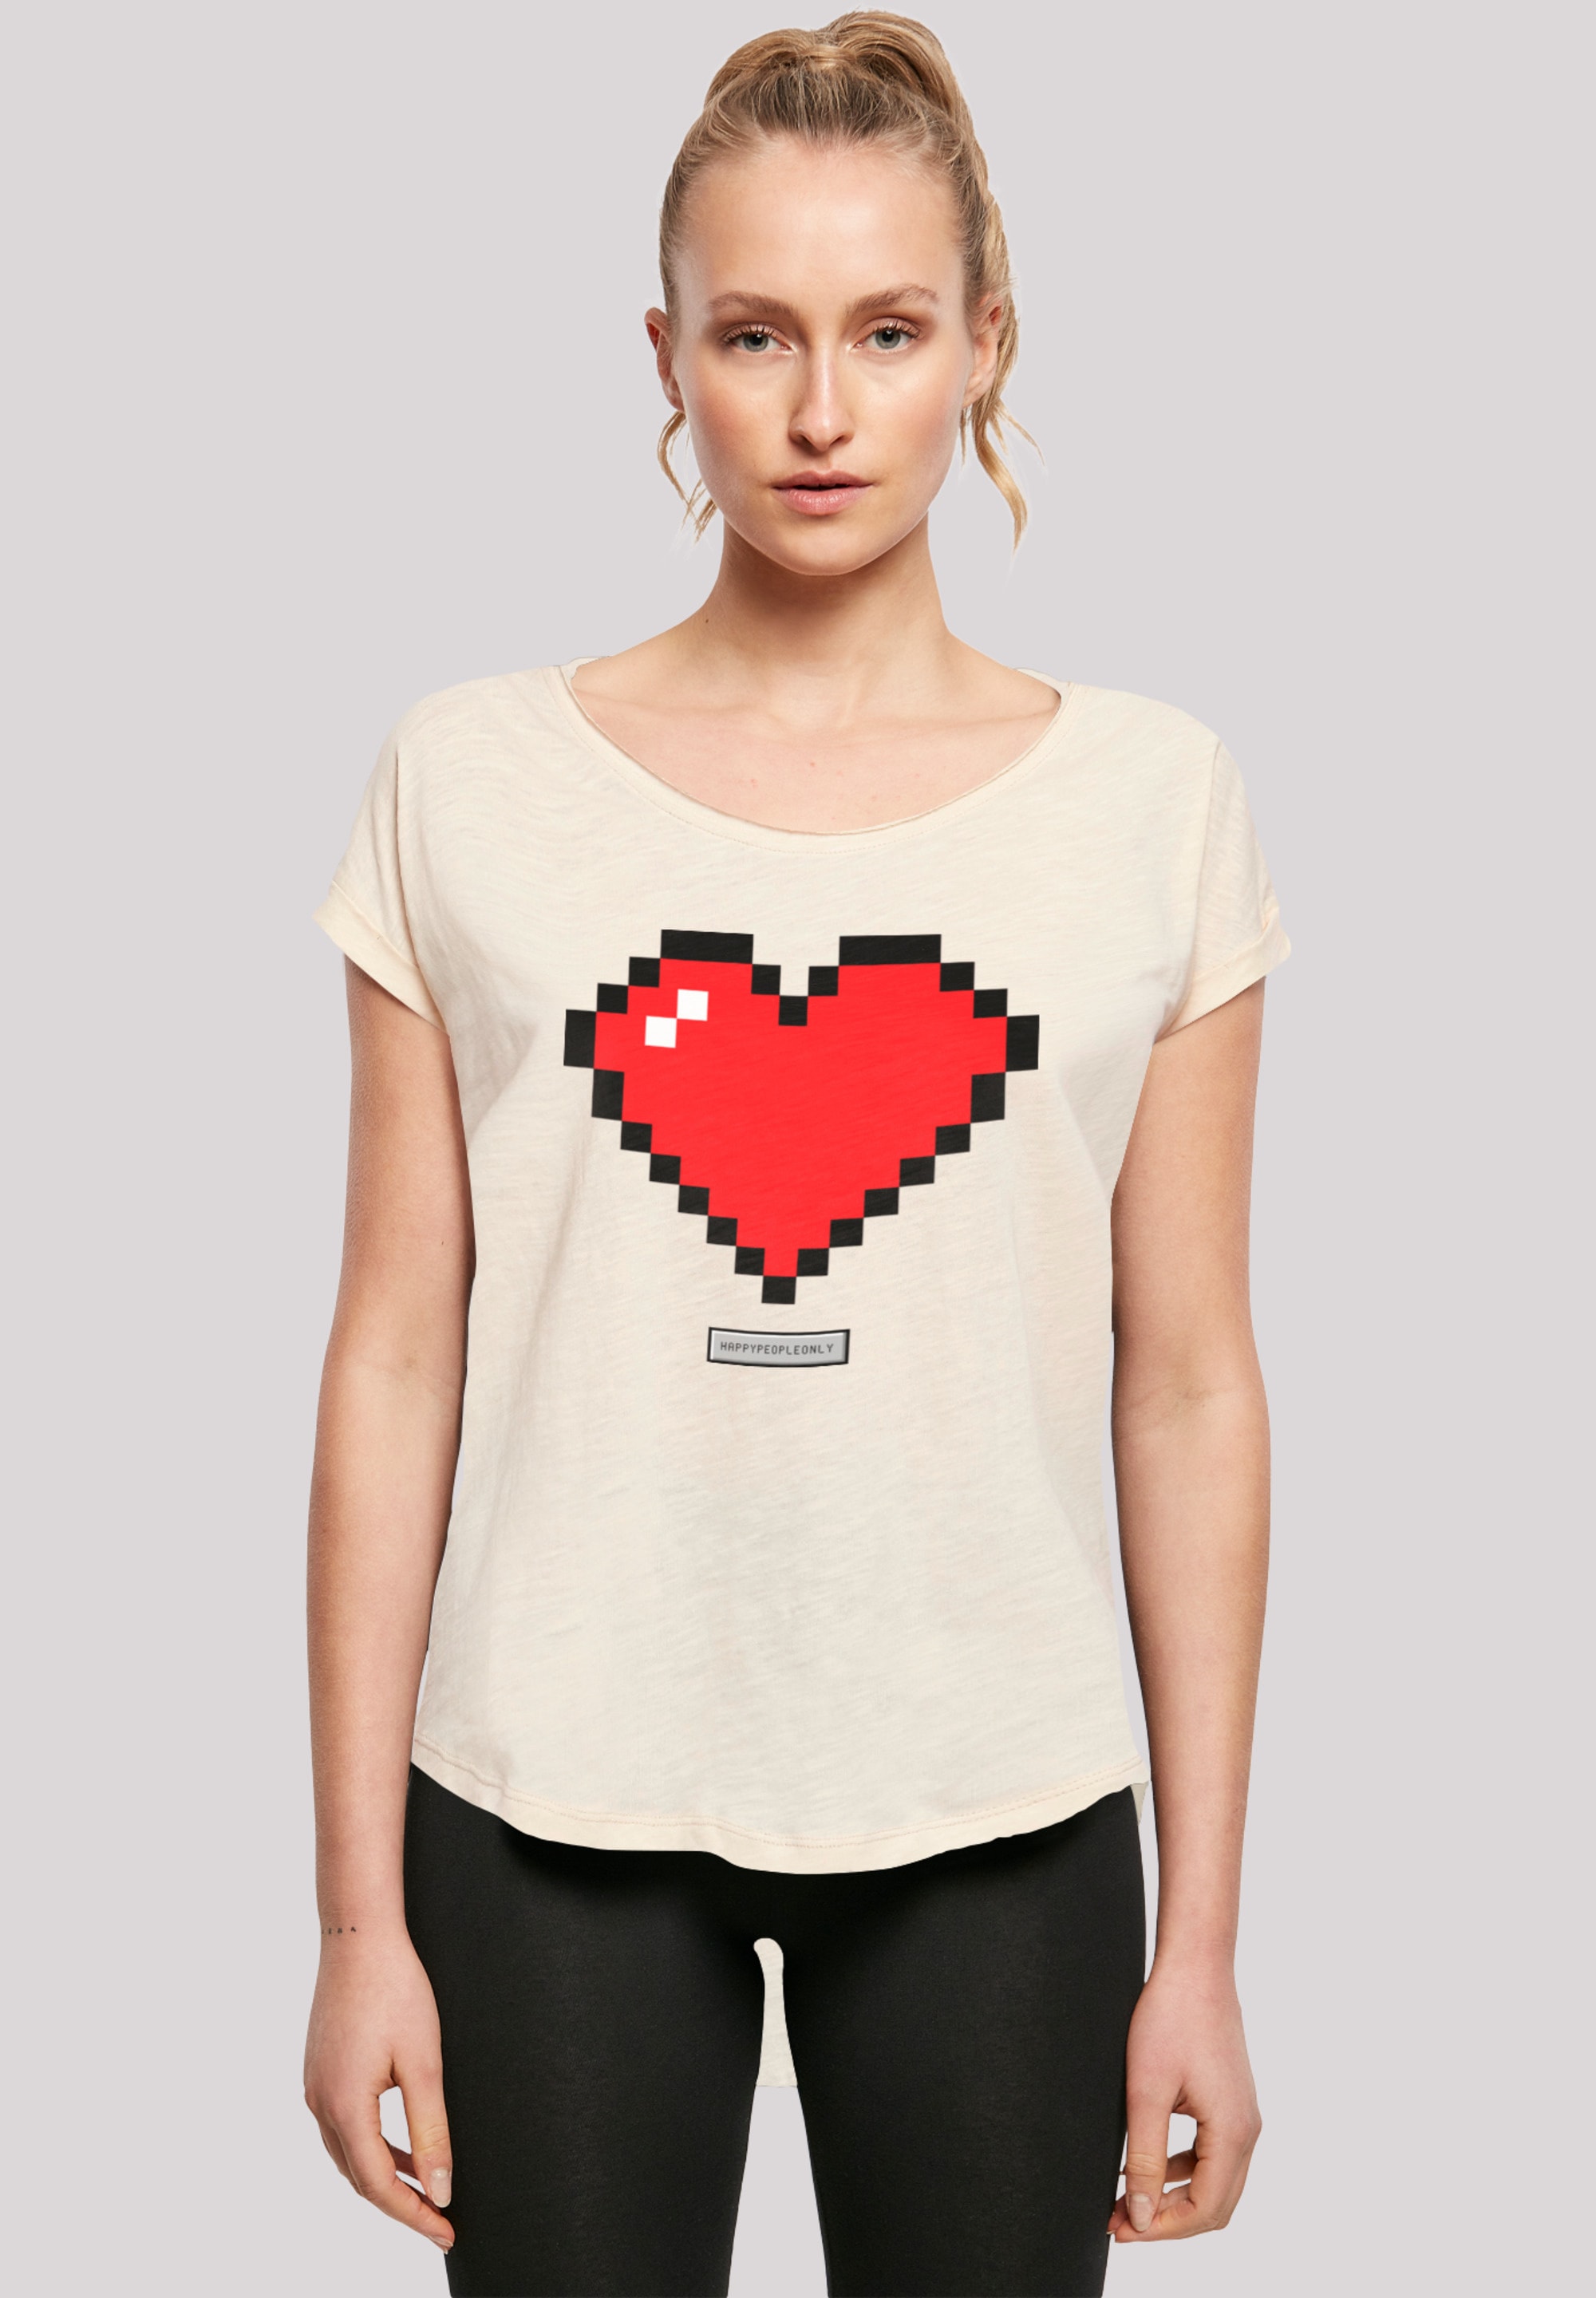 T-Shirt Vibes bestellen »Pixel Happy Good F4NT4STIC Print People«, Herz